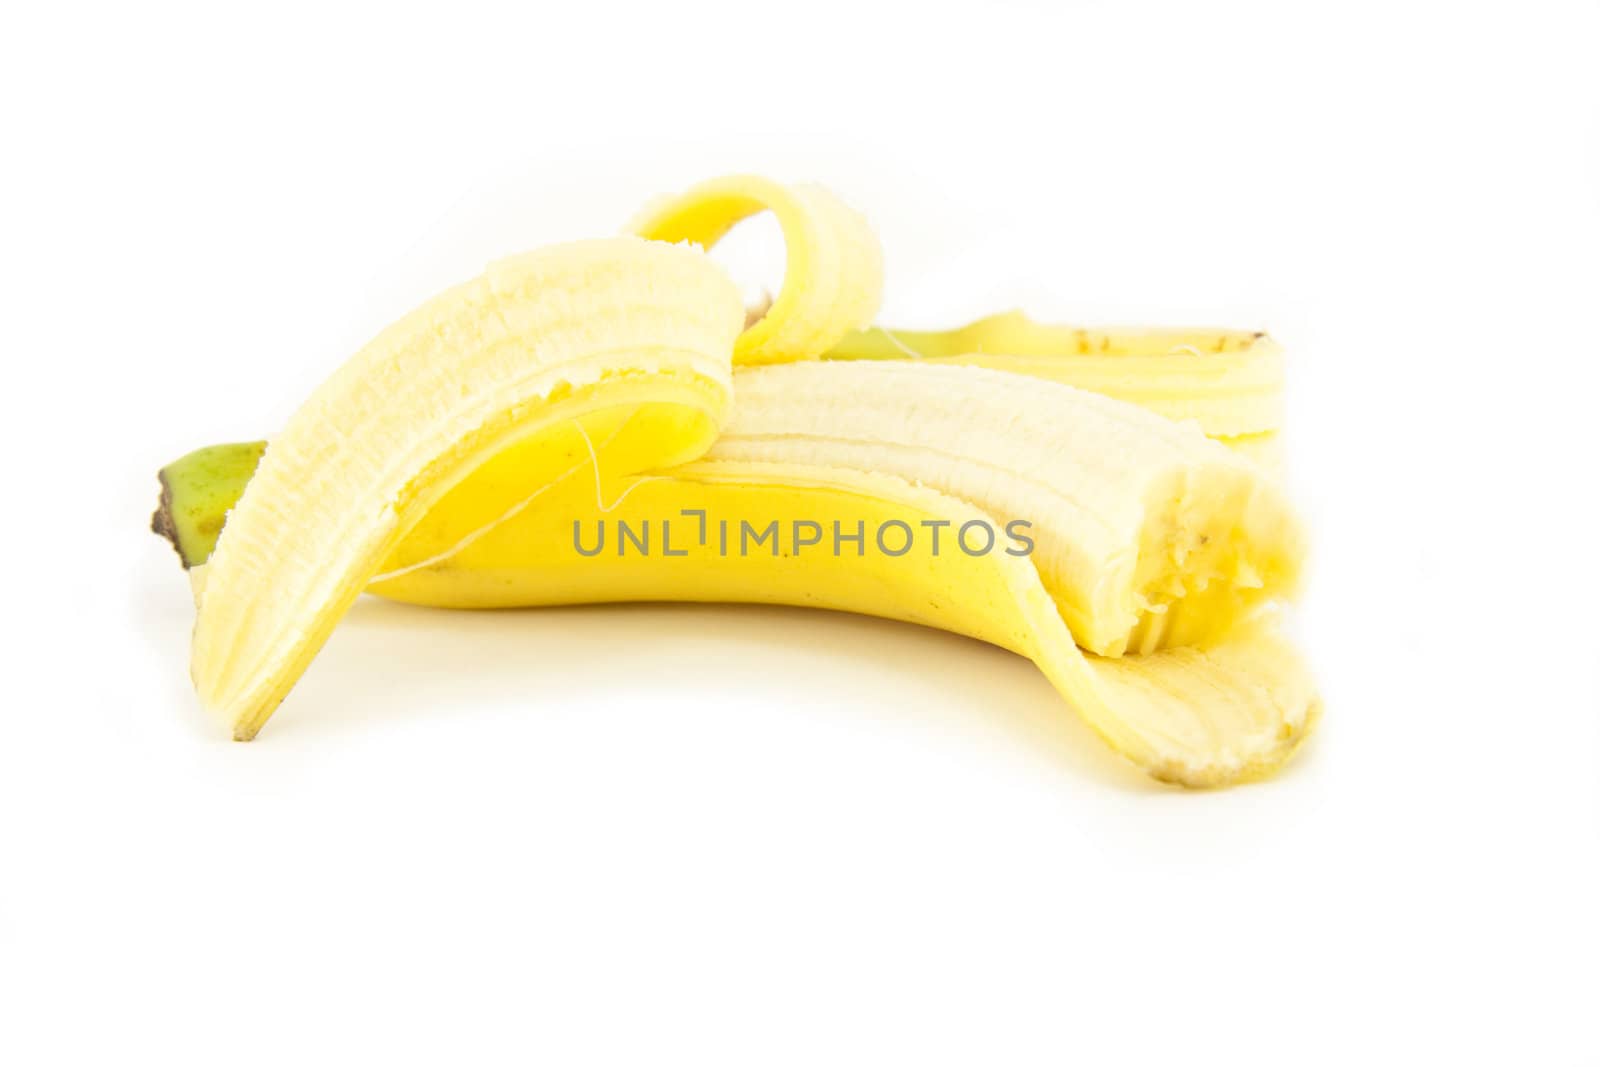 Half eaten banana by ChrisAlleaume